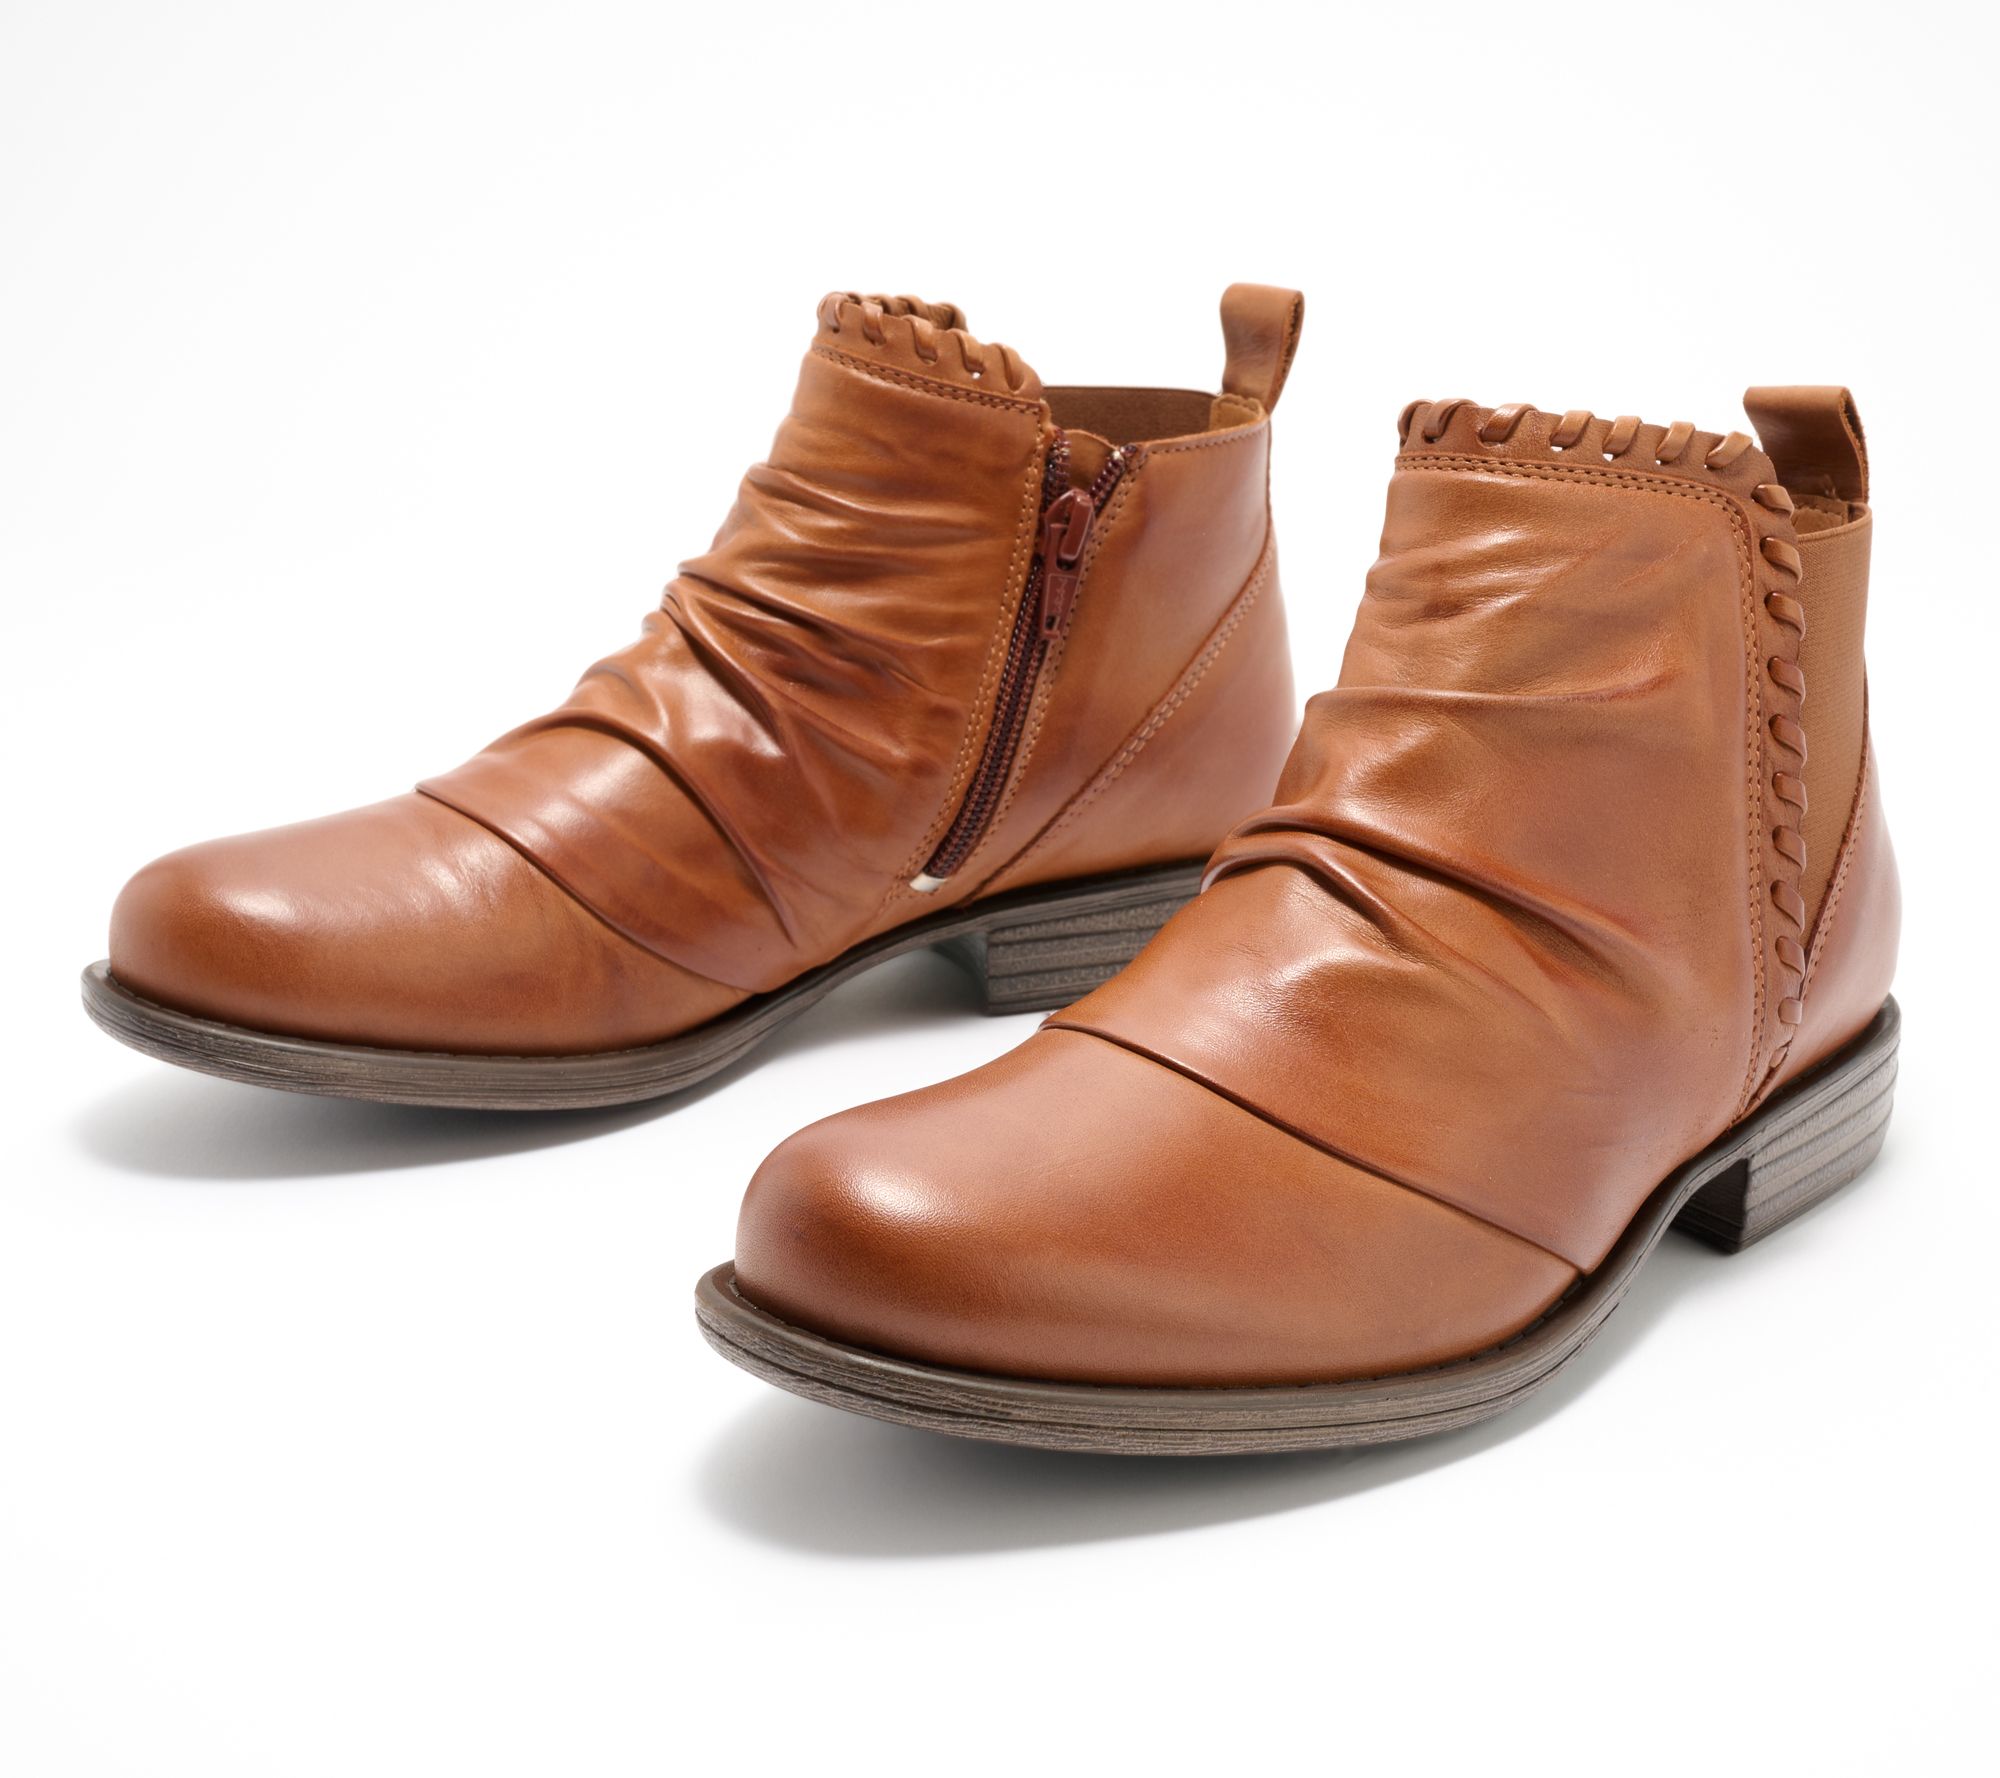 Miz Mooz Leather Whip Stitch Ankle Boots -Lynda, Size EU 40(US 9-9.5), Brandy